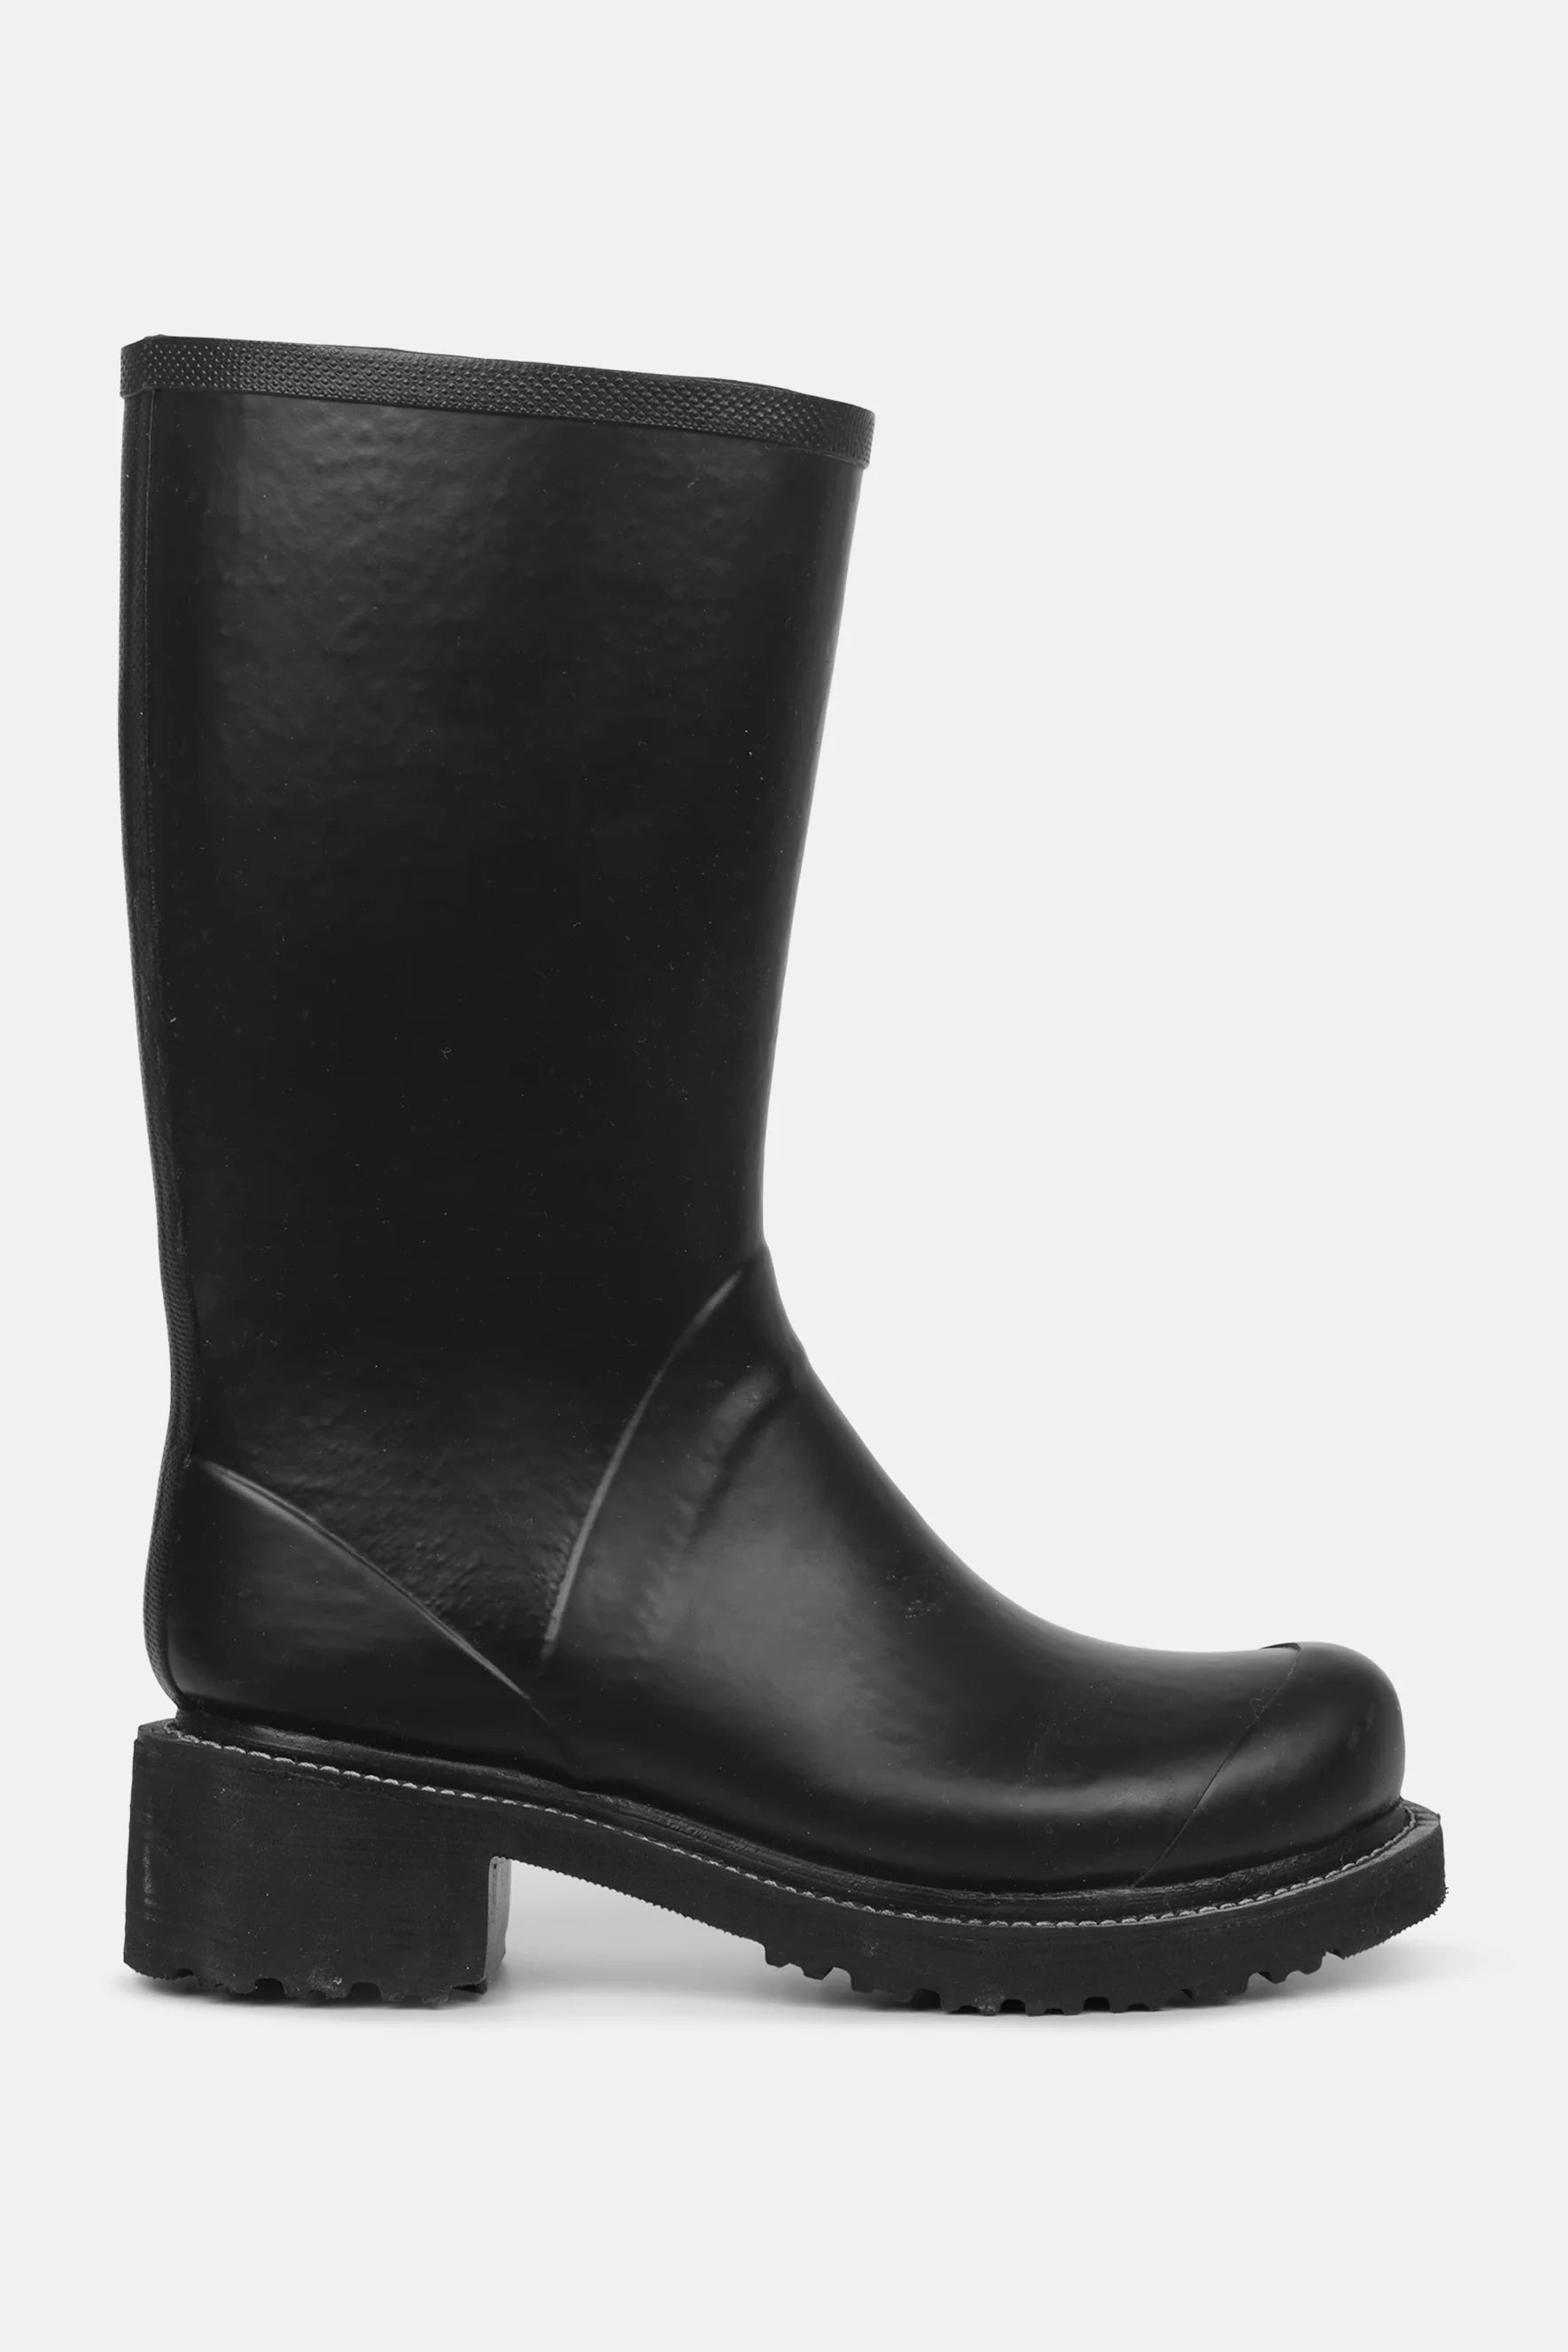 Ilse Jacobsen 3/4 Rubber Boots With Zip - Black